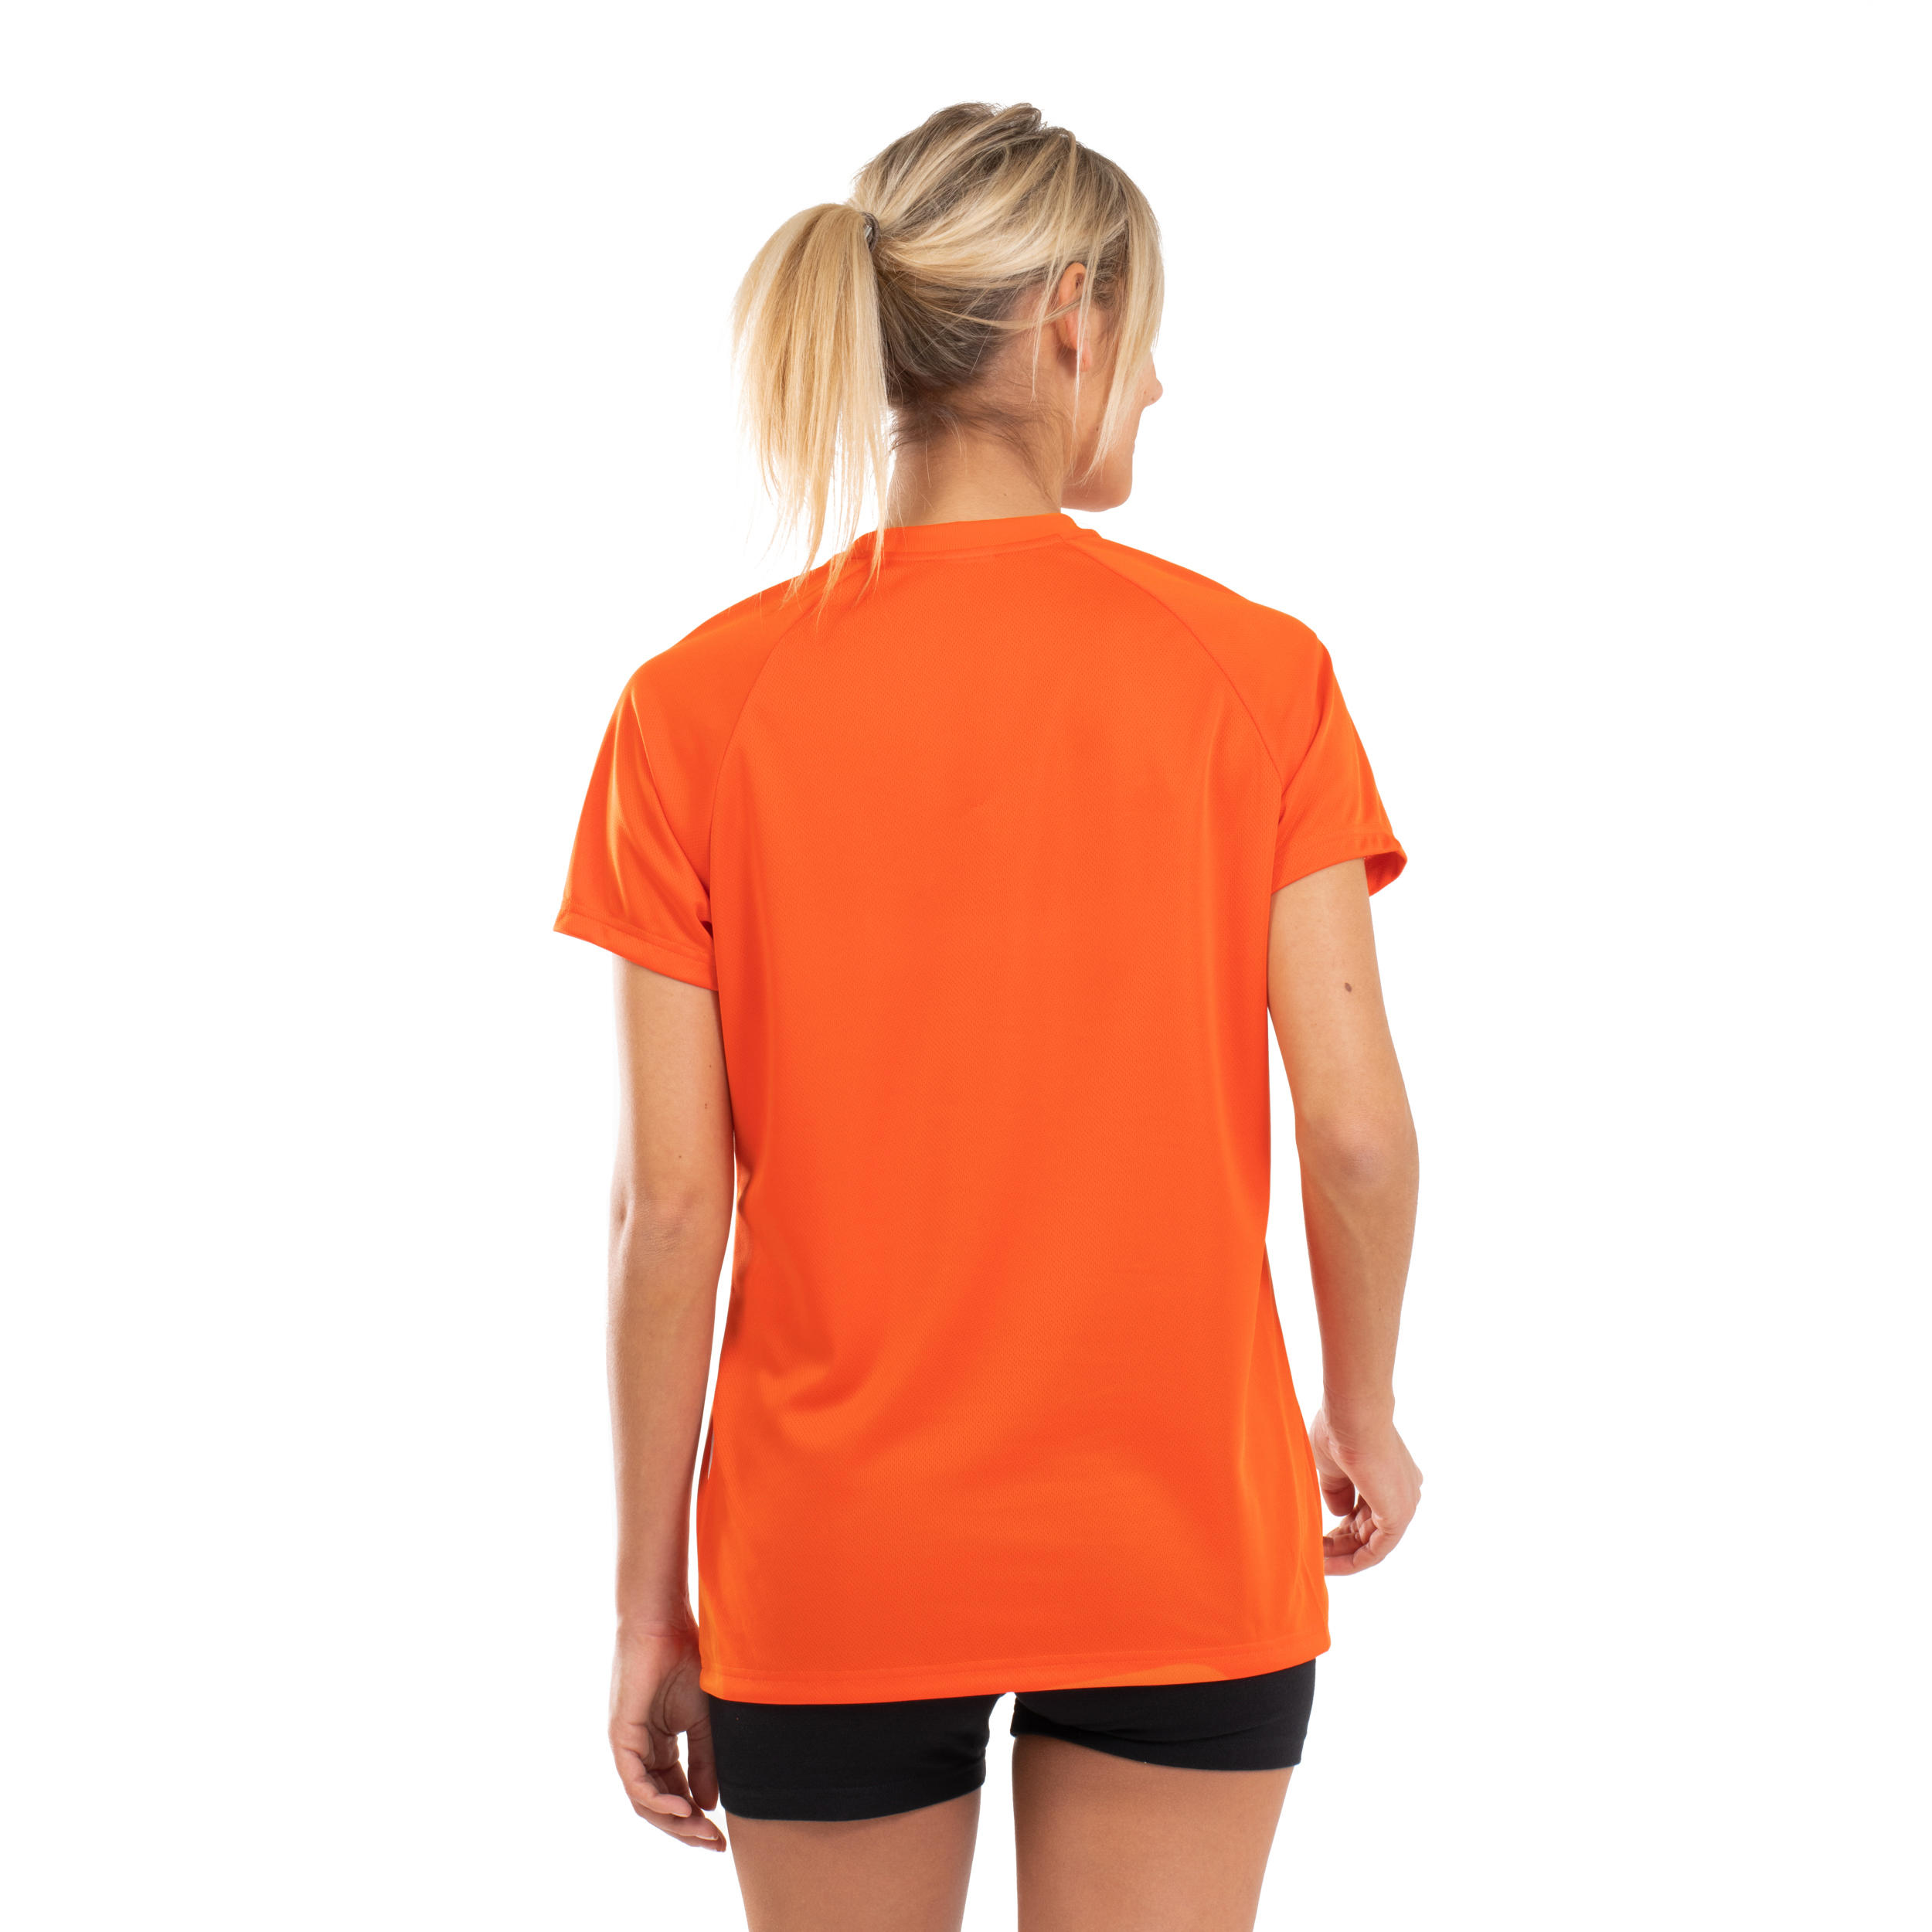 V100 Women's Volleyball Jersey - Orange 5/8